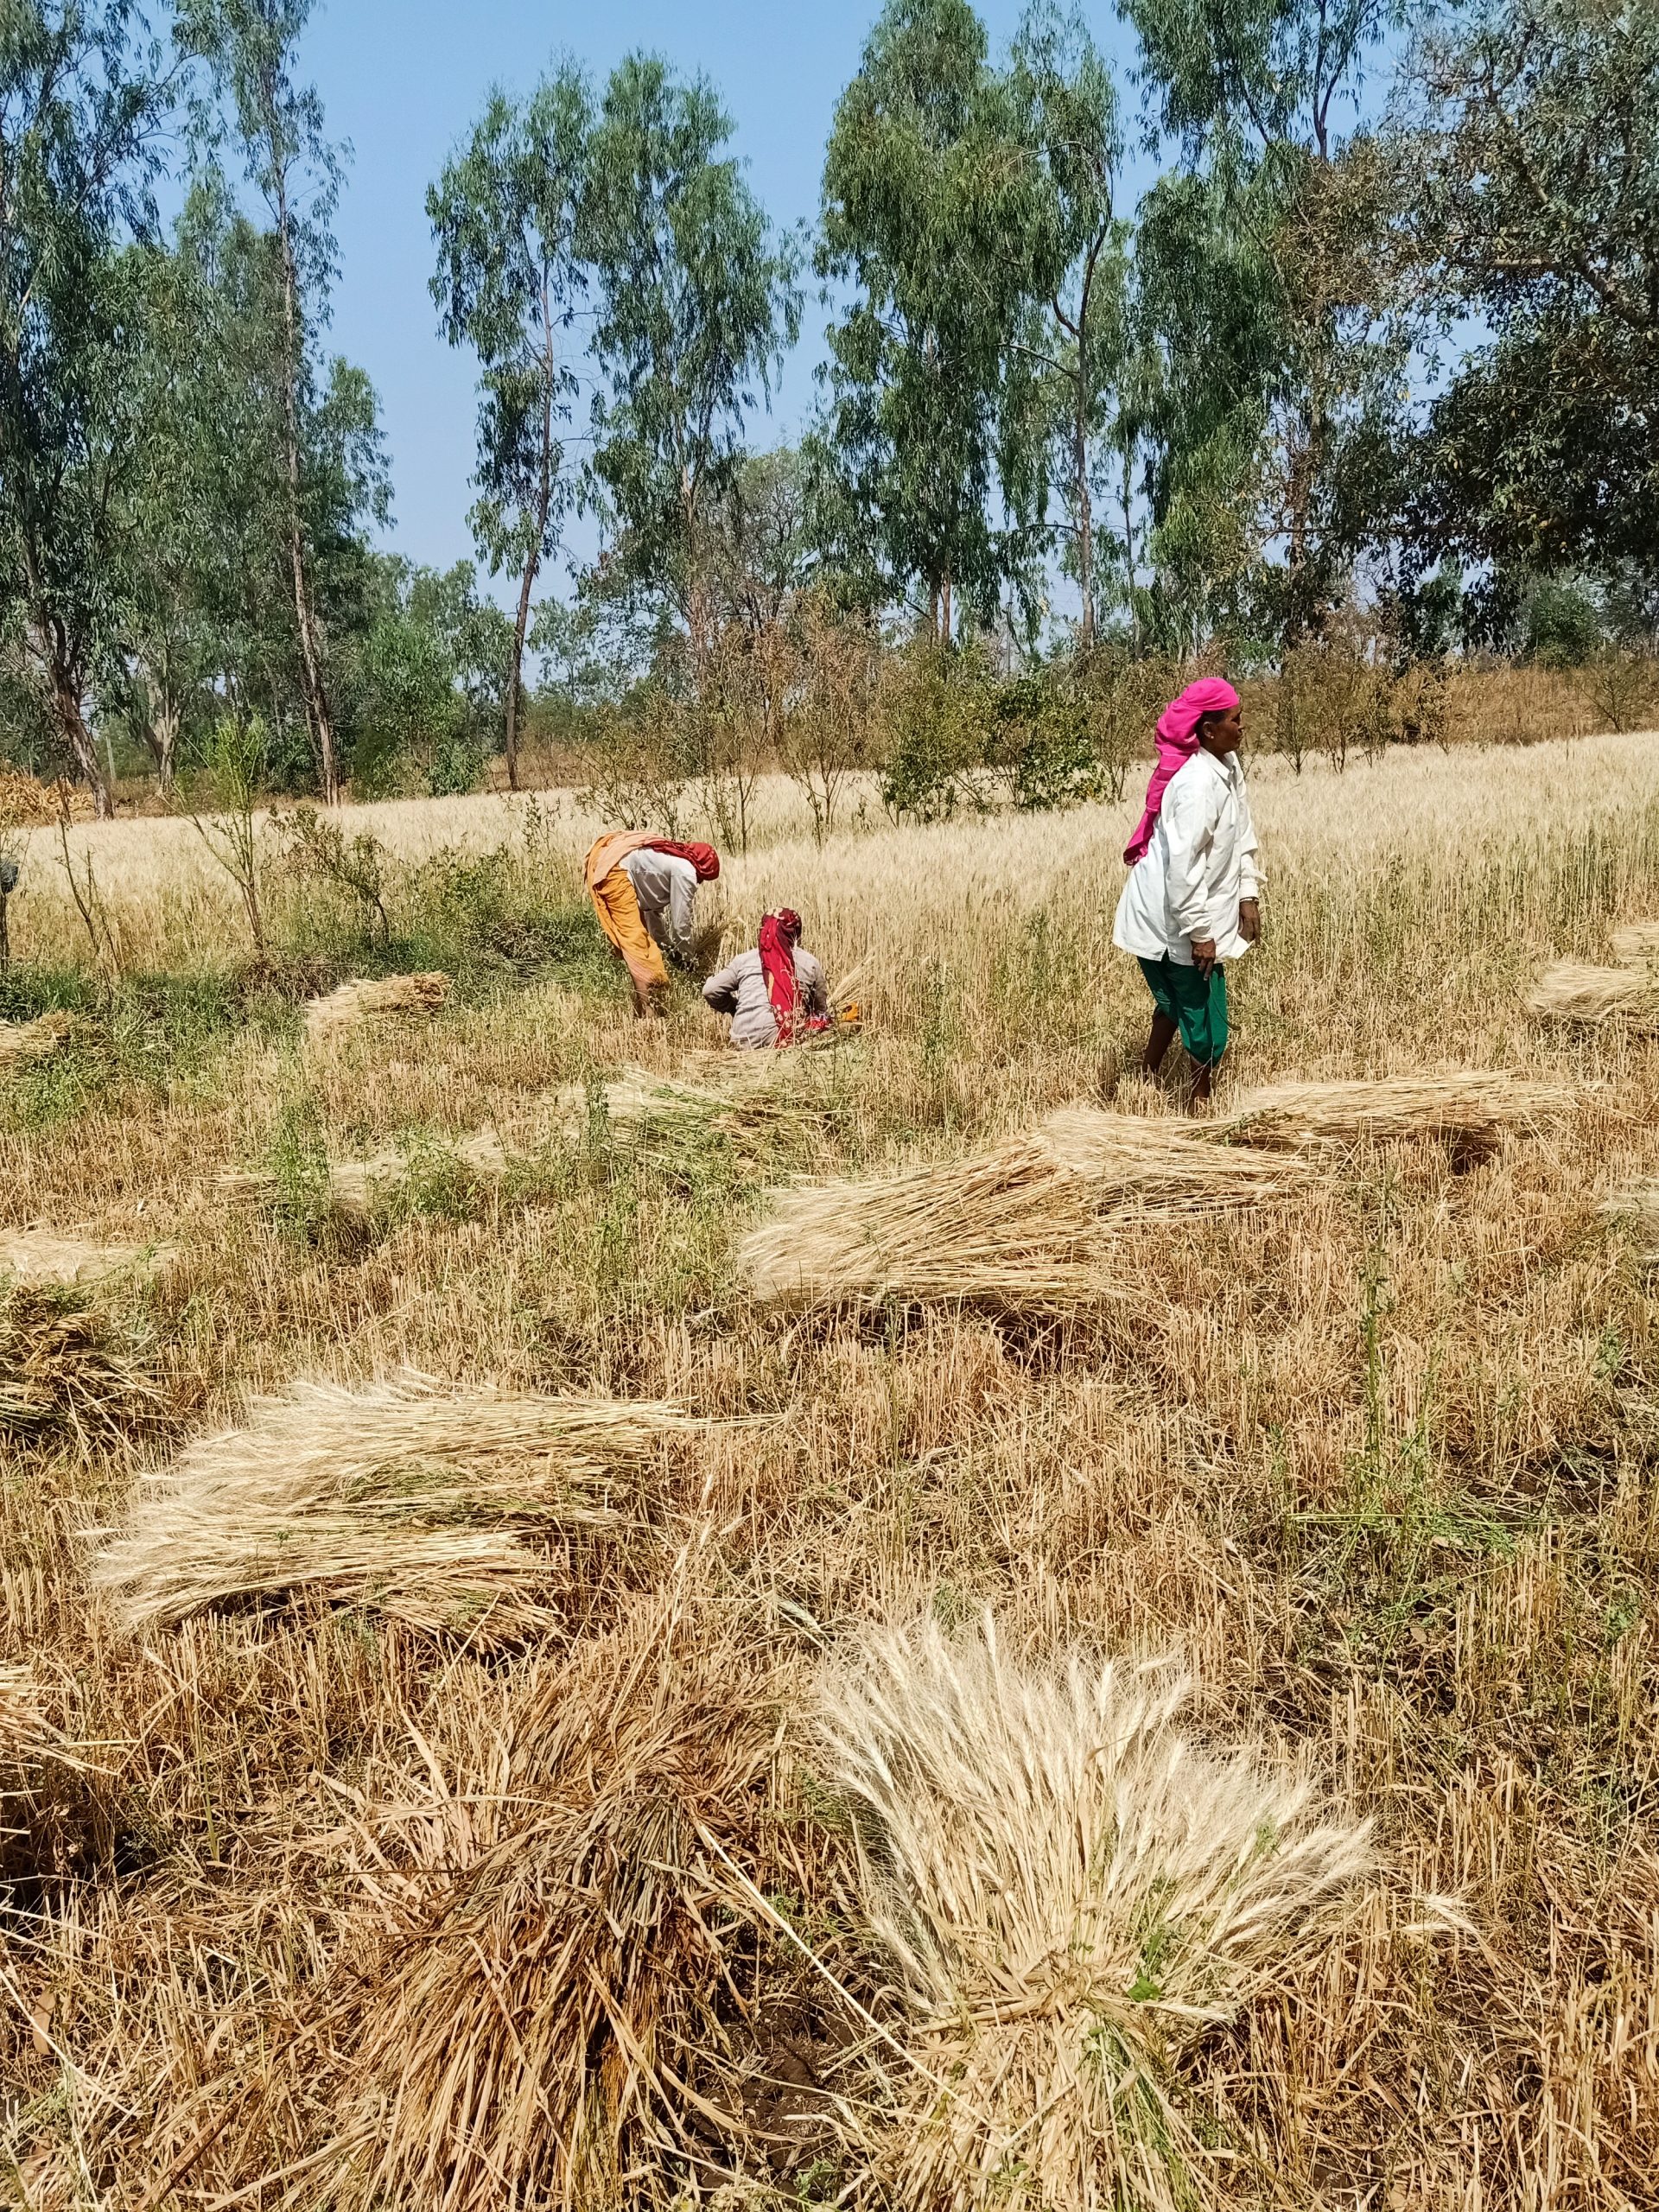 Farmers harvesting their crops